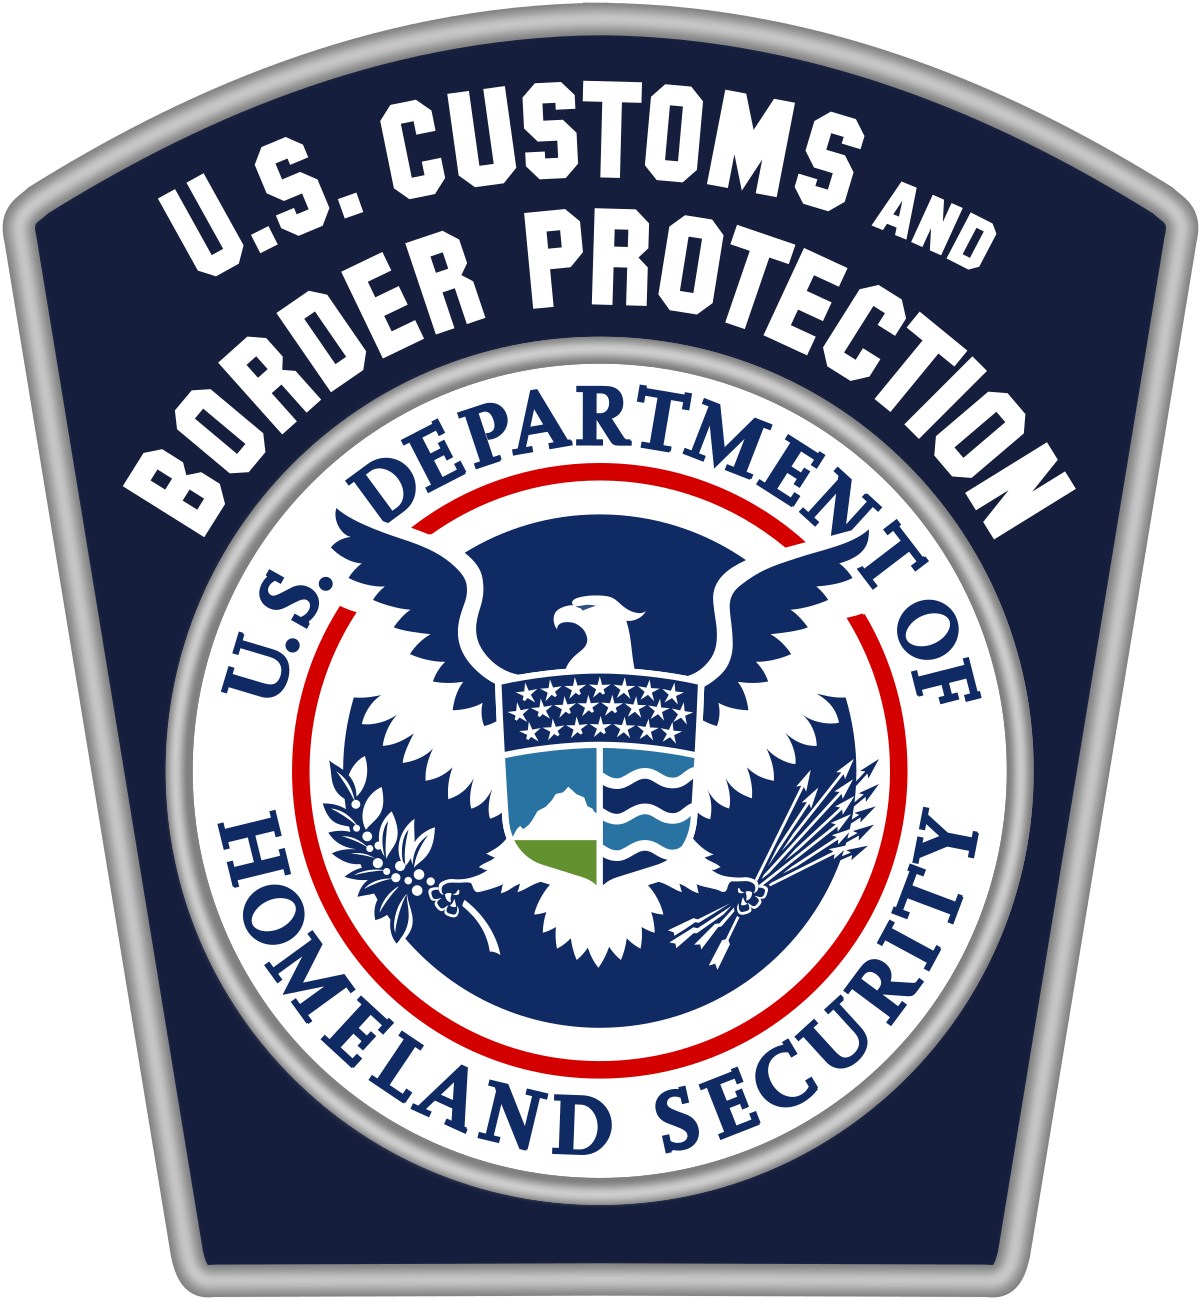 Airport Customs Logo - U.S. Customs and Border Protection